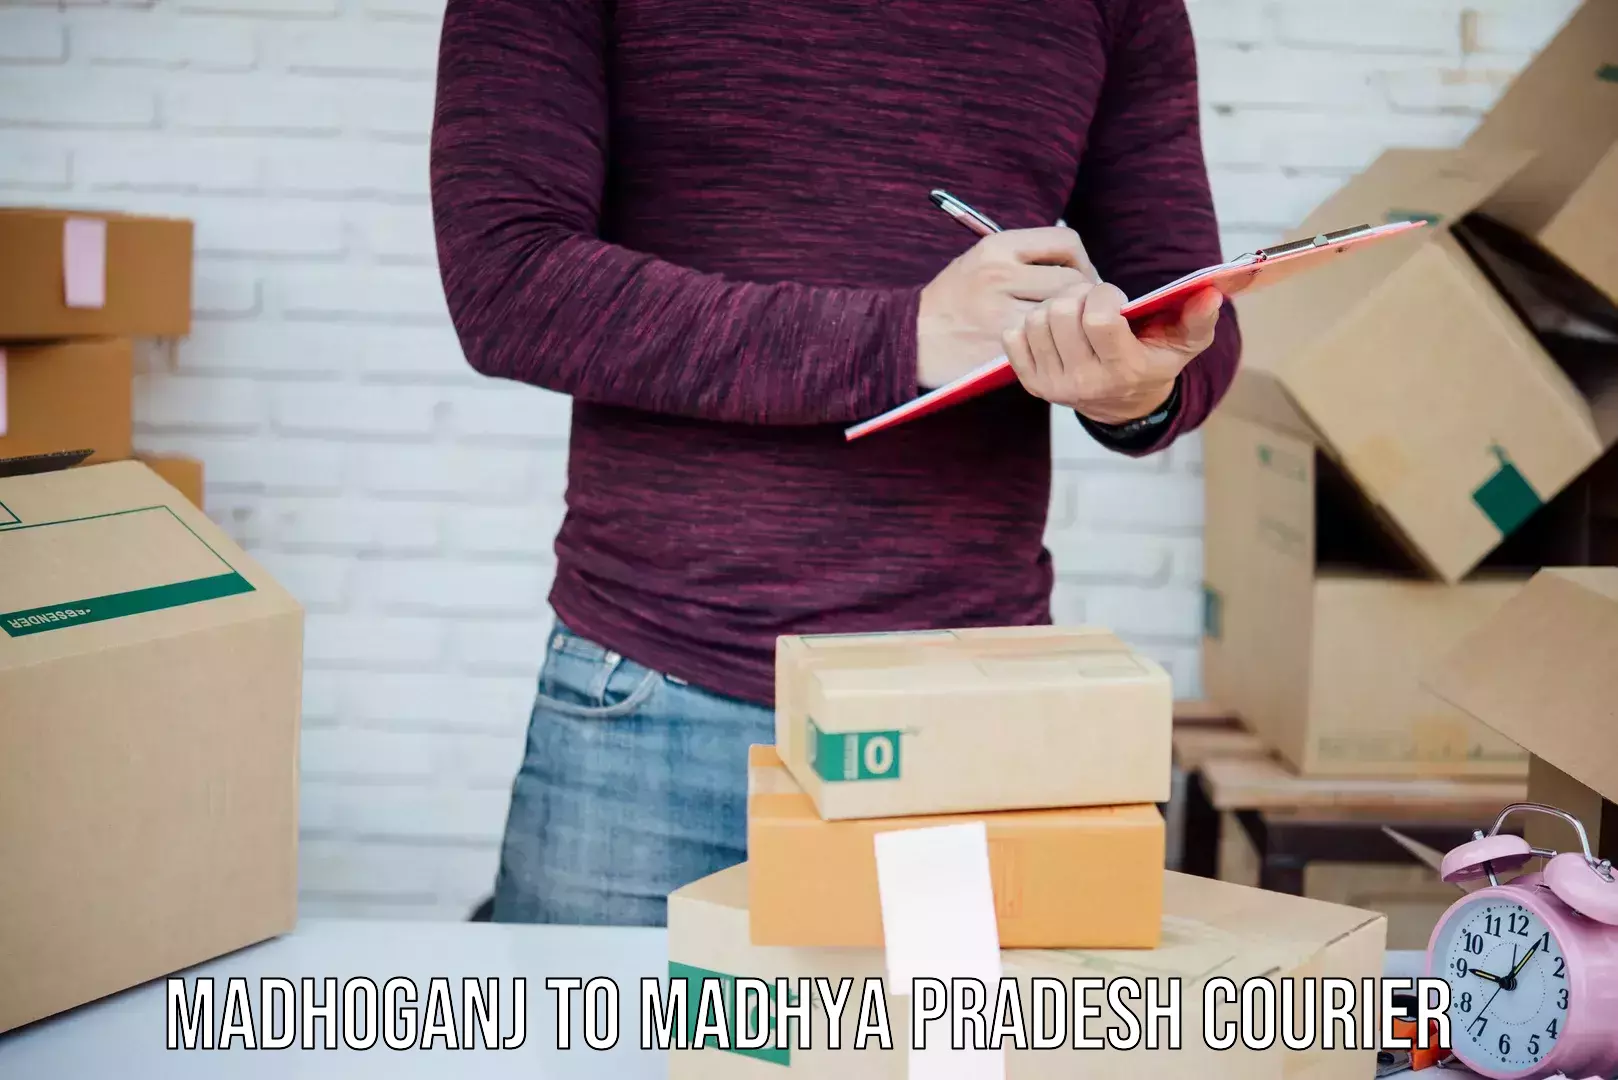 Courier service efficiency in Madhoganj to Nalkheda